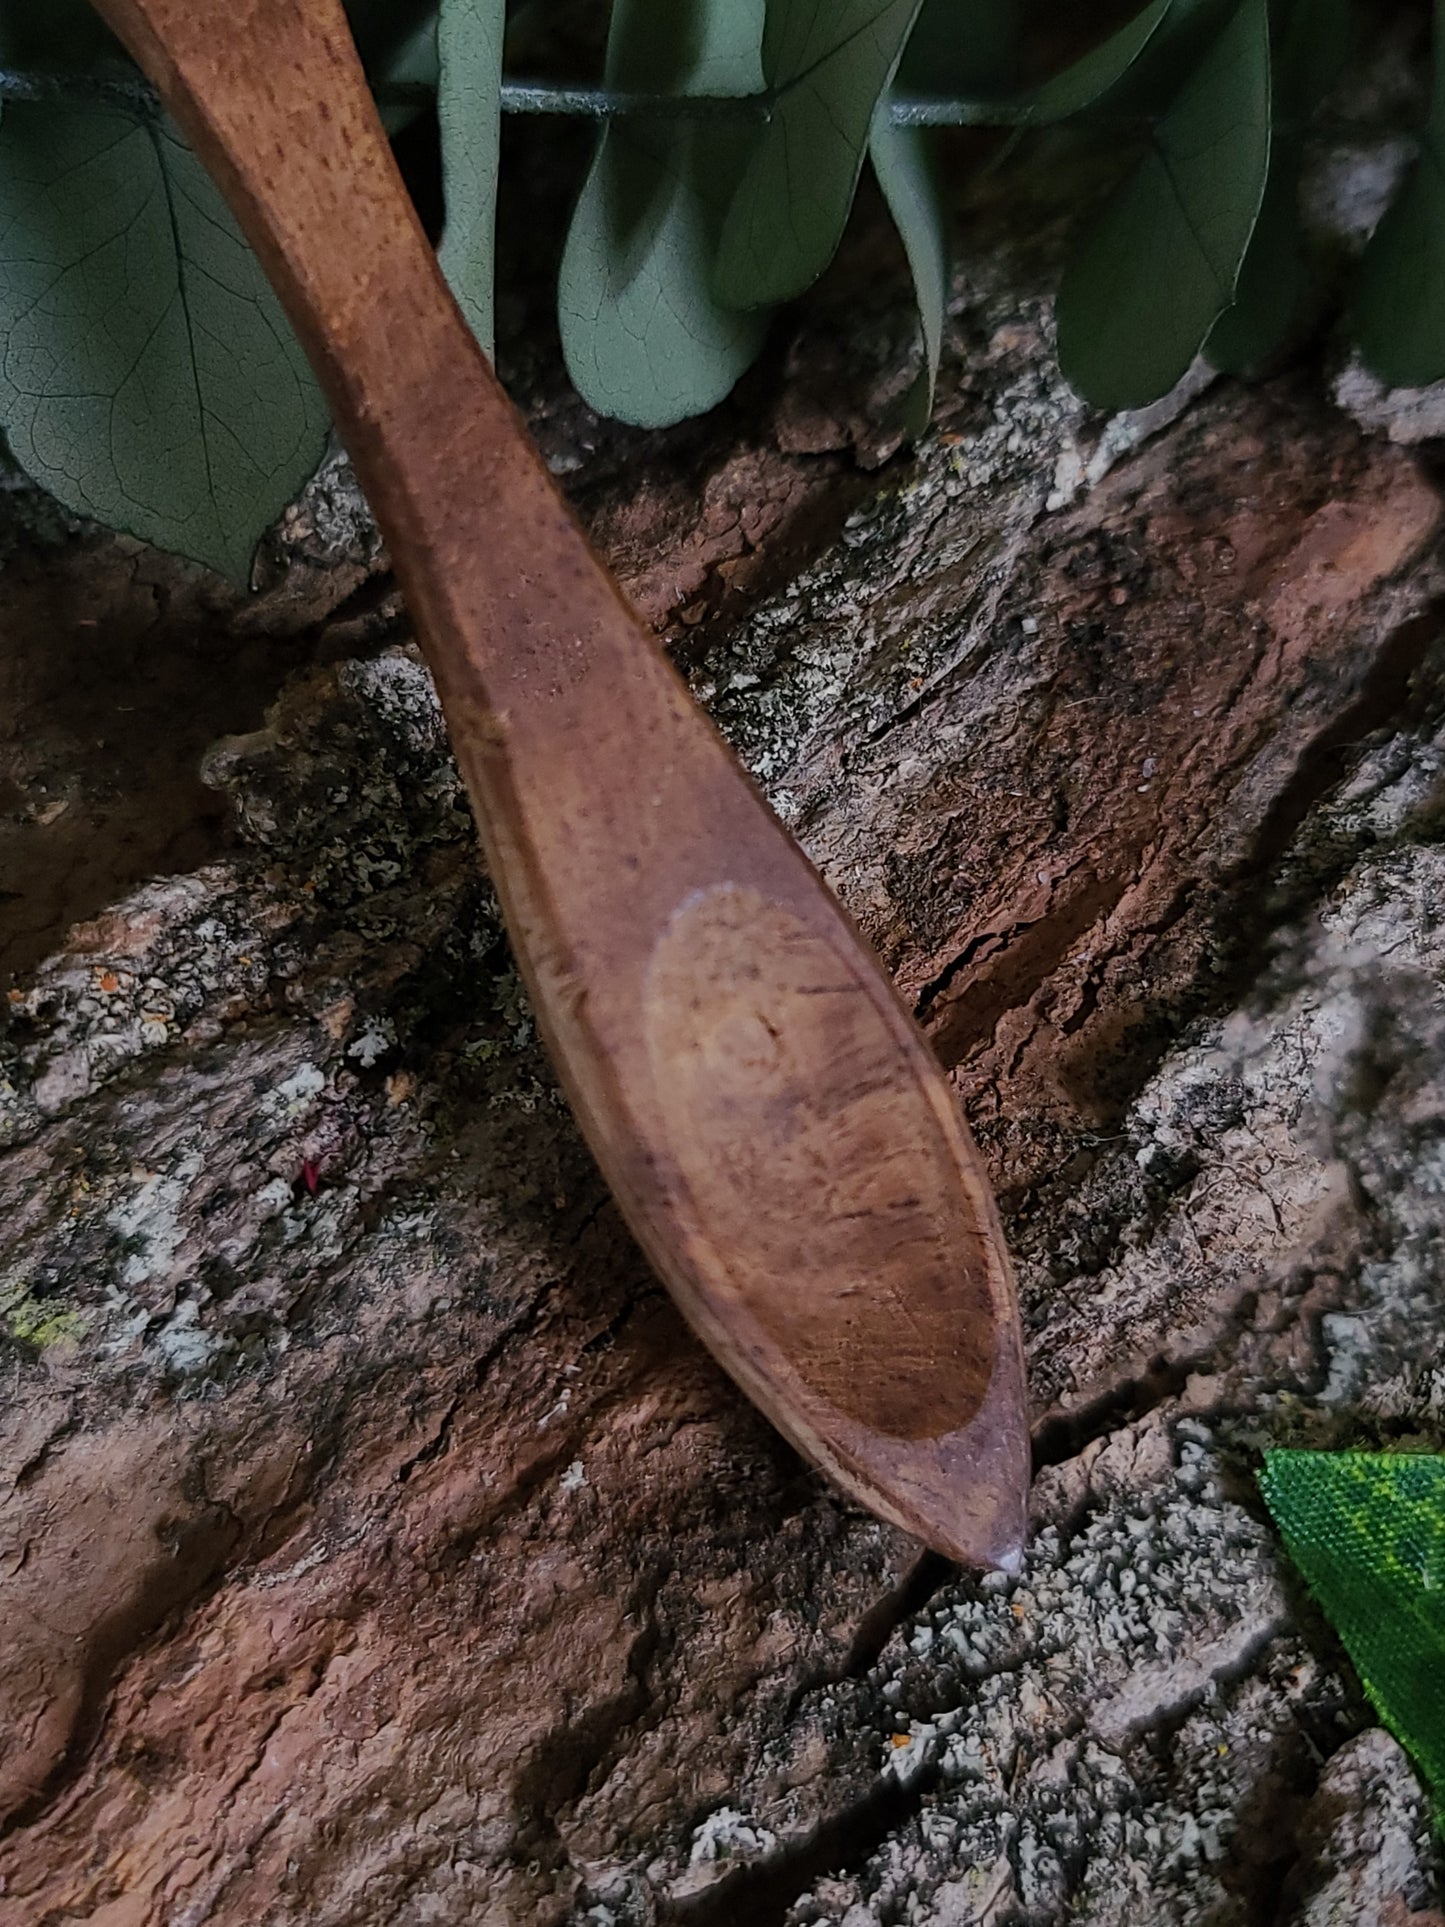 Goddess Wooden Carved Altar Spoon